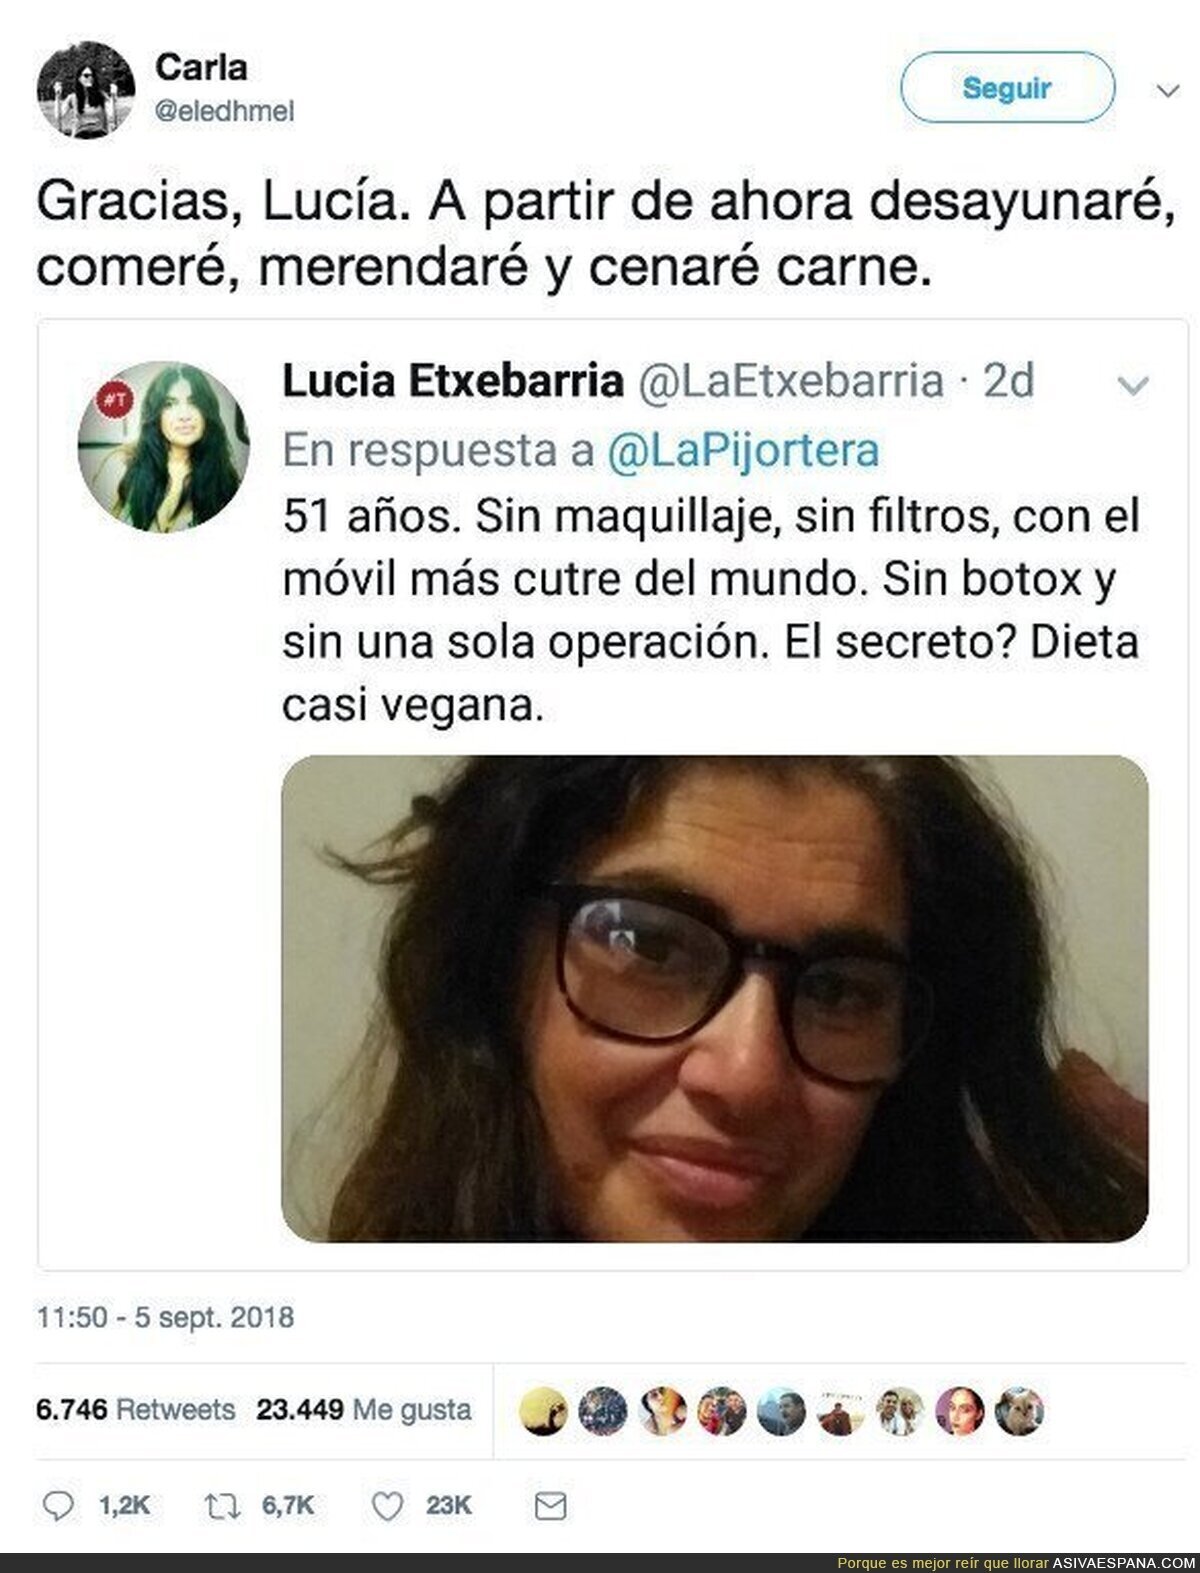 Lucía Etxebarria tiene un secreto: dieta CASI vegana